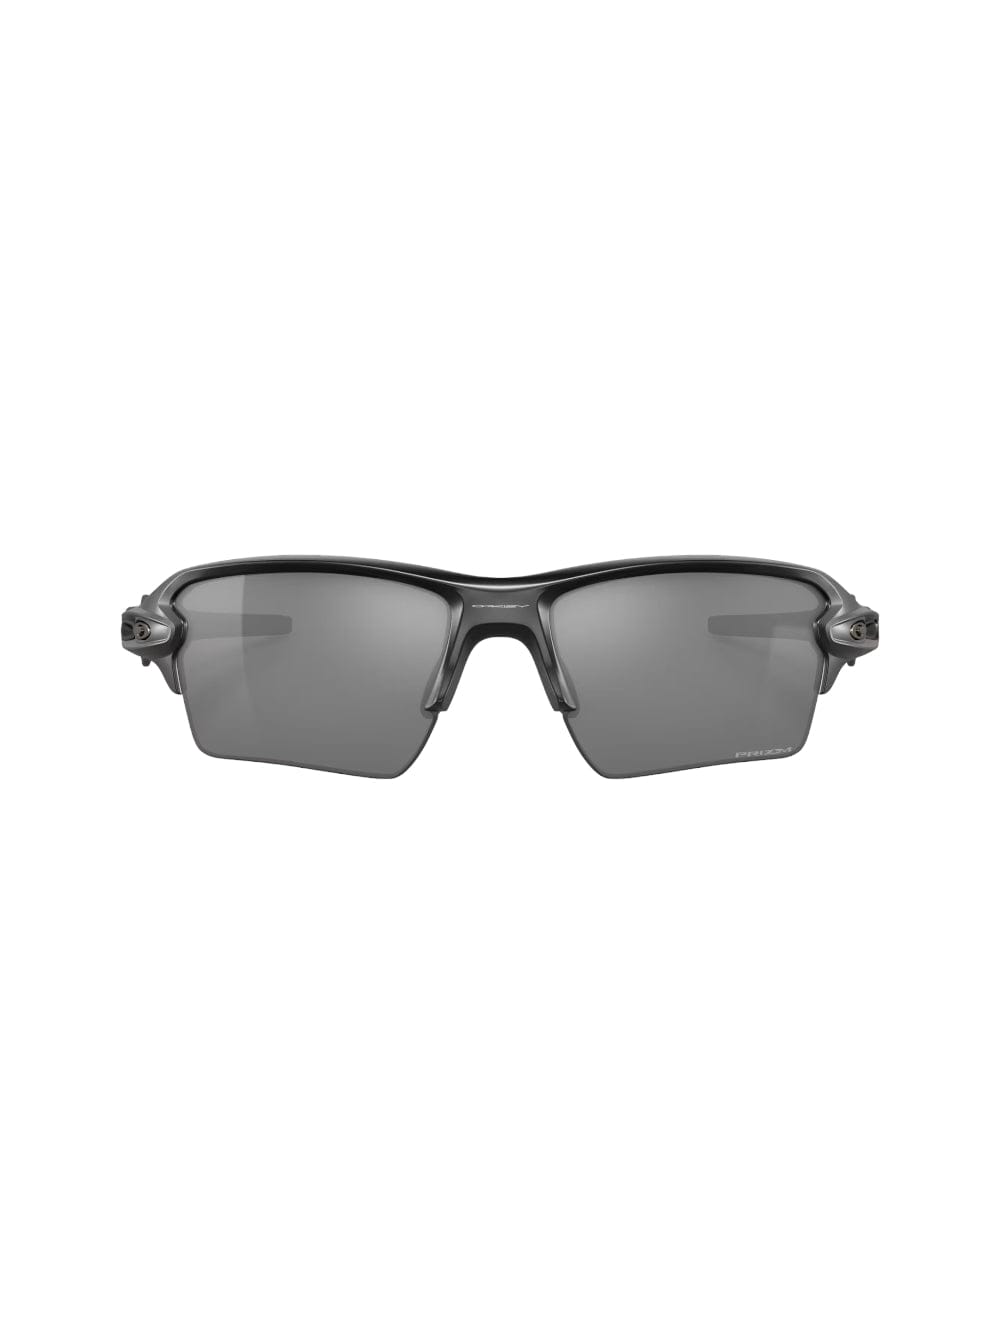 Oakley Flak 2.0 Xl - 9188 Sunglasses In Black